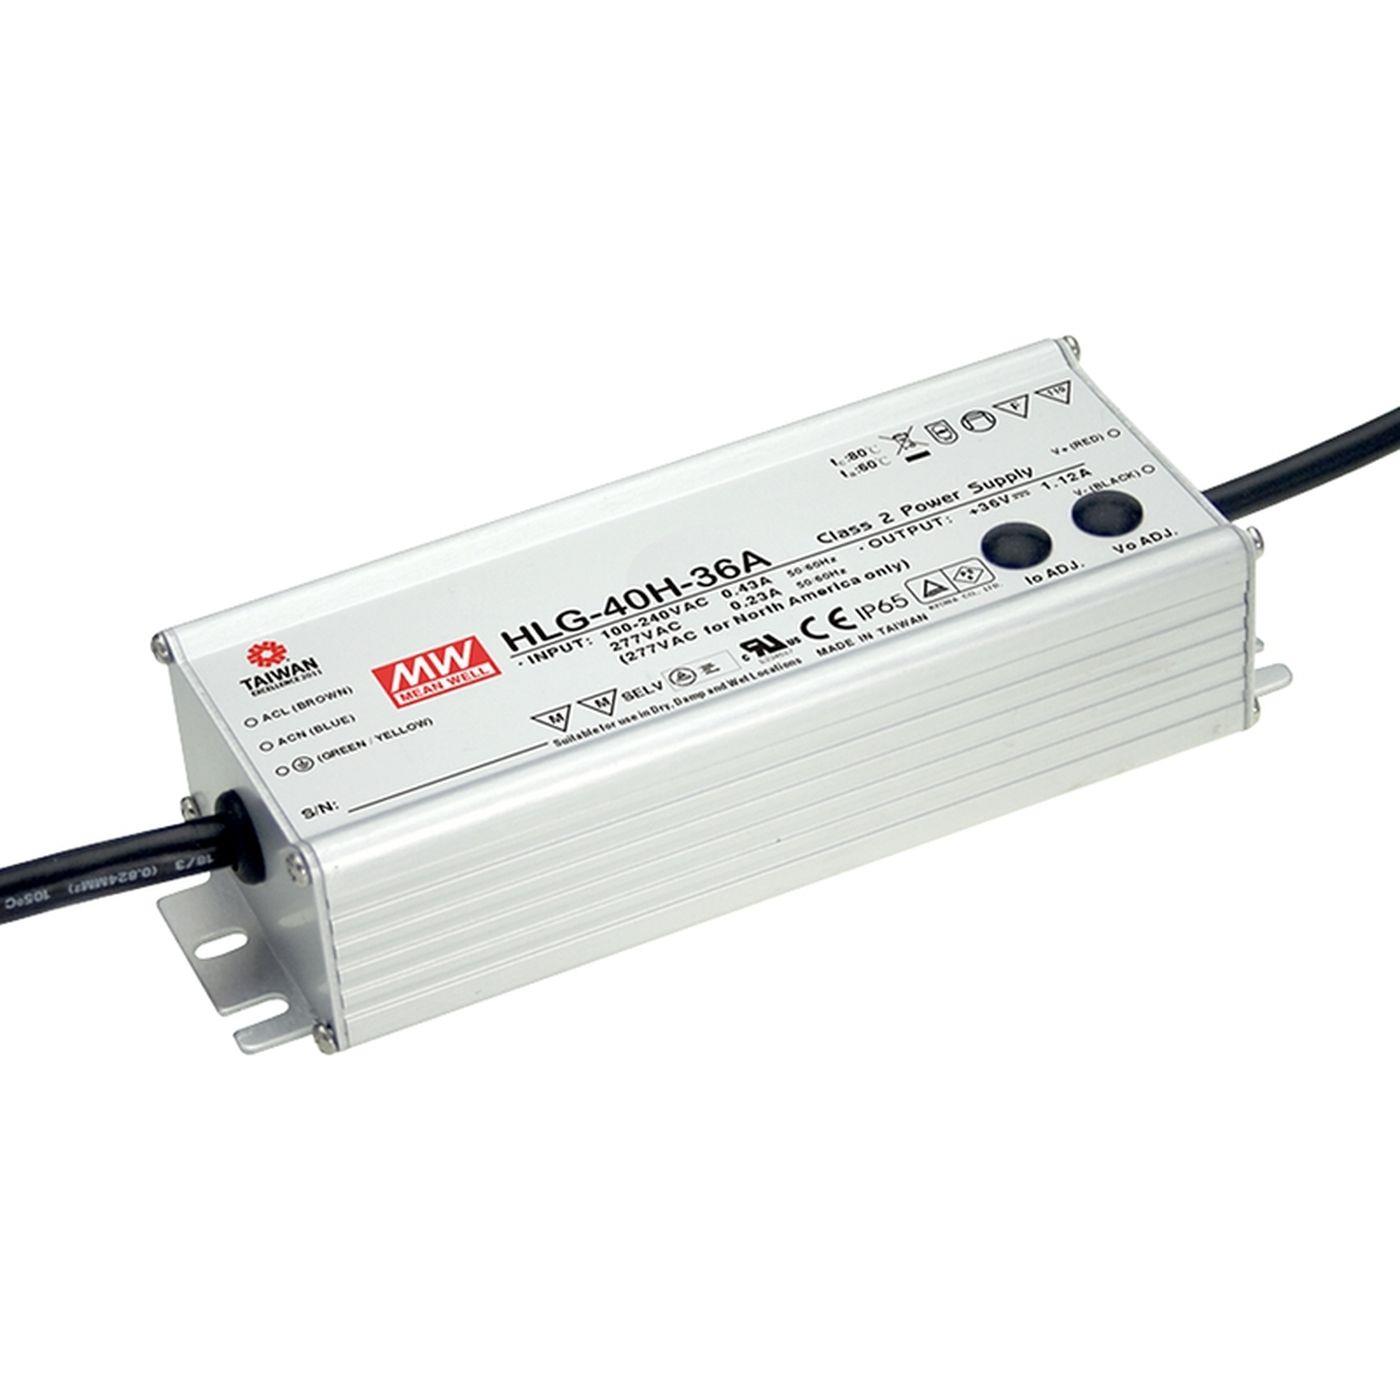 HLG-40H-12A 40W 12V 3,33A LED power supply Transformer Driver IP65